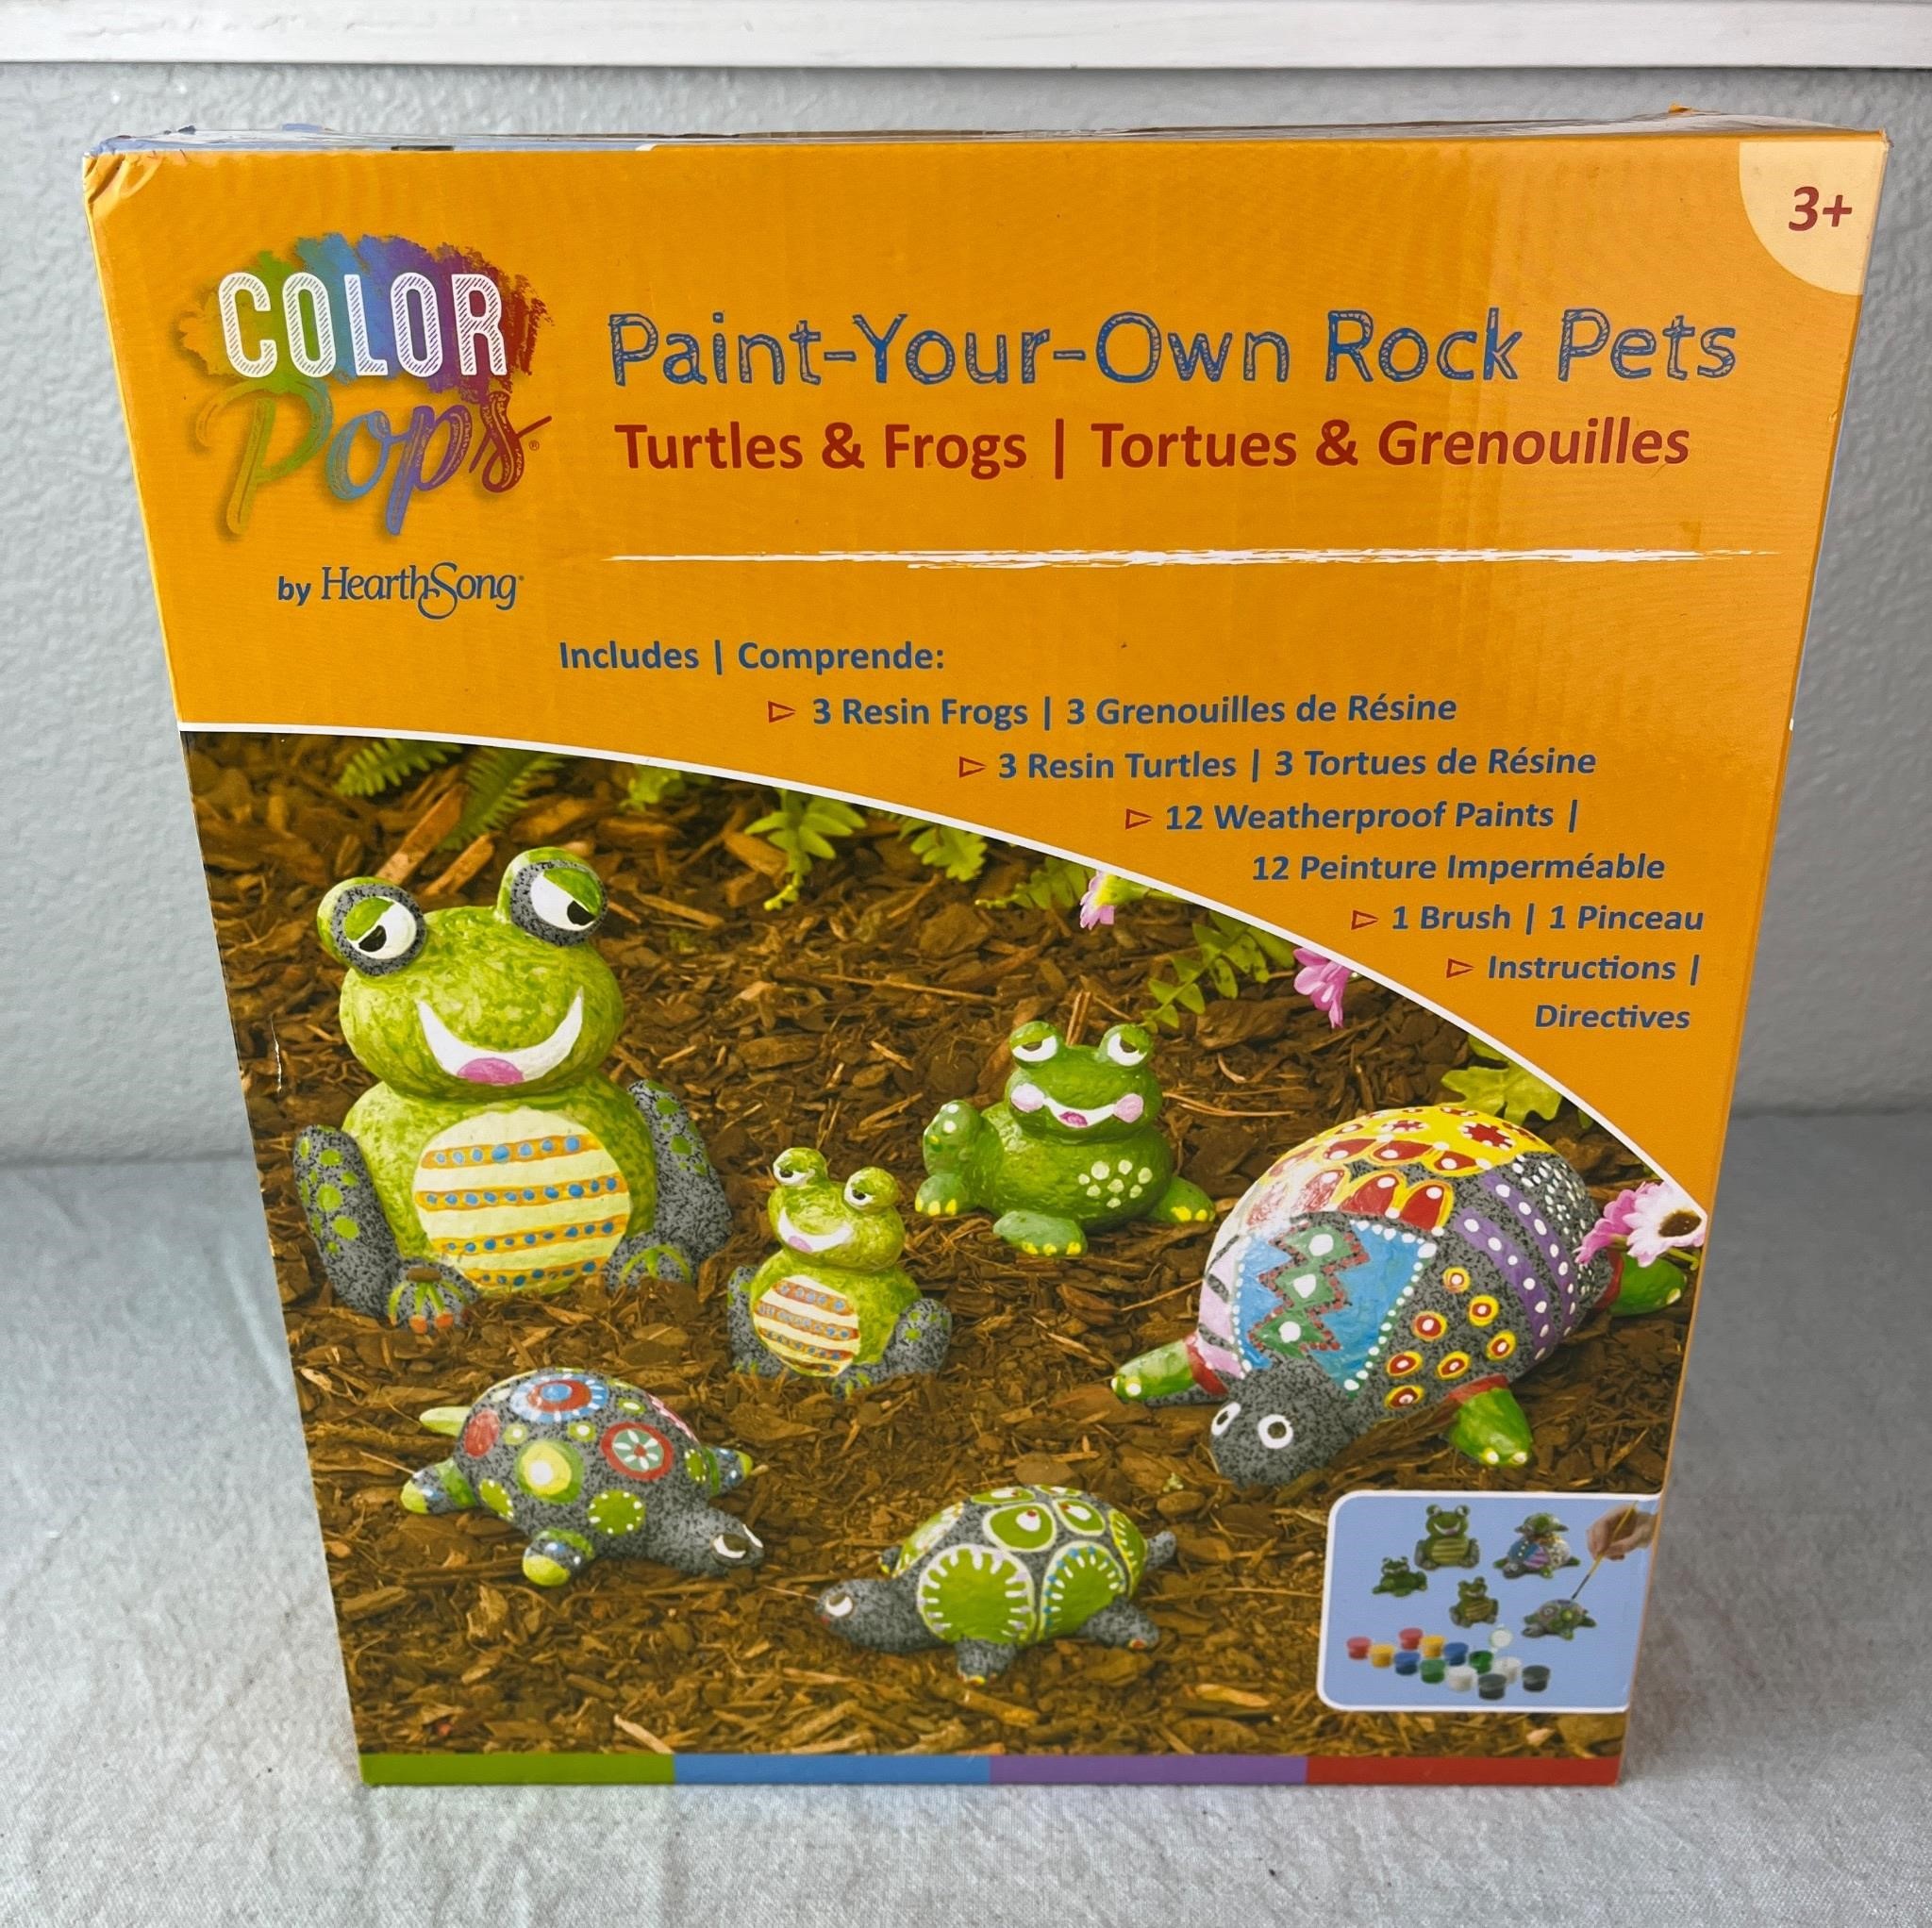 New Color Pops Turtles&Frogs Paint Rock Pets